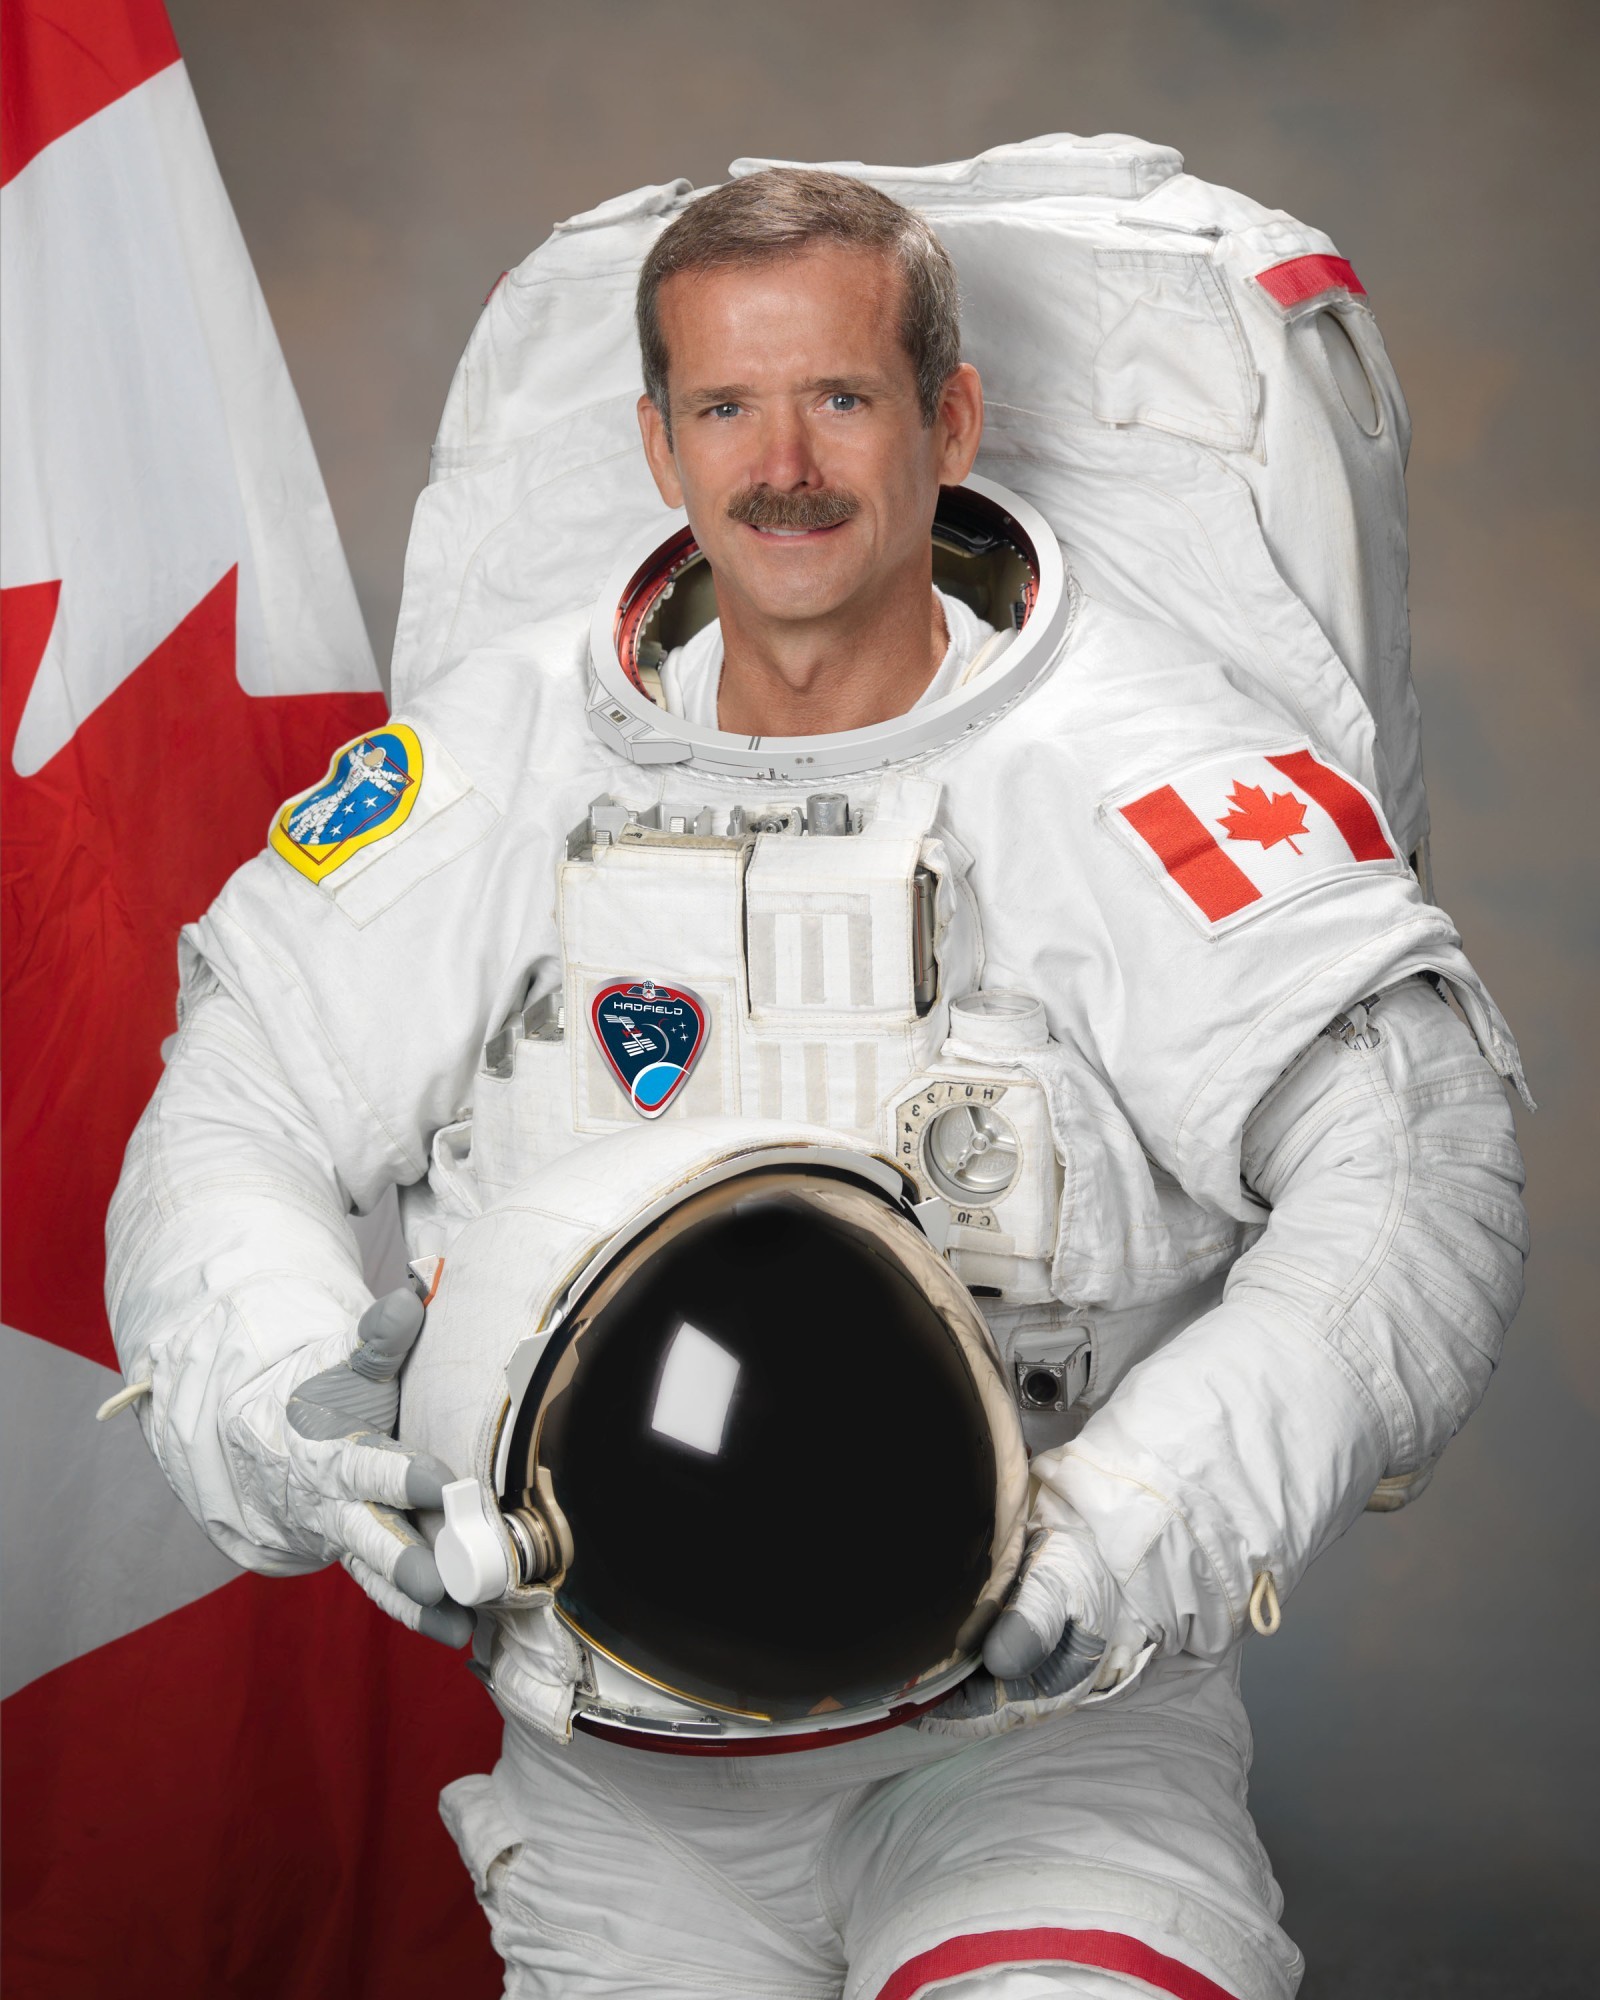 Chris_Hadfield_2011 Foto NASA auf Wikipedia gemeinfrei